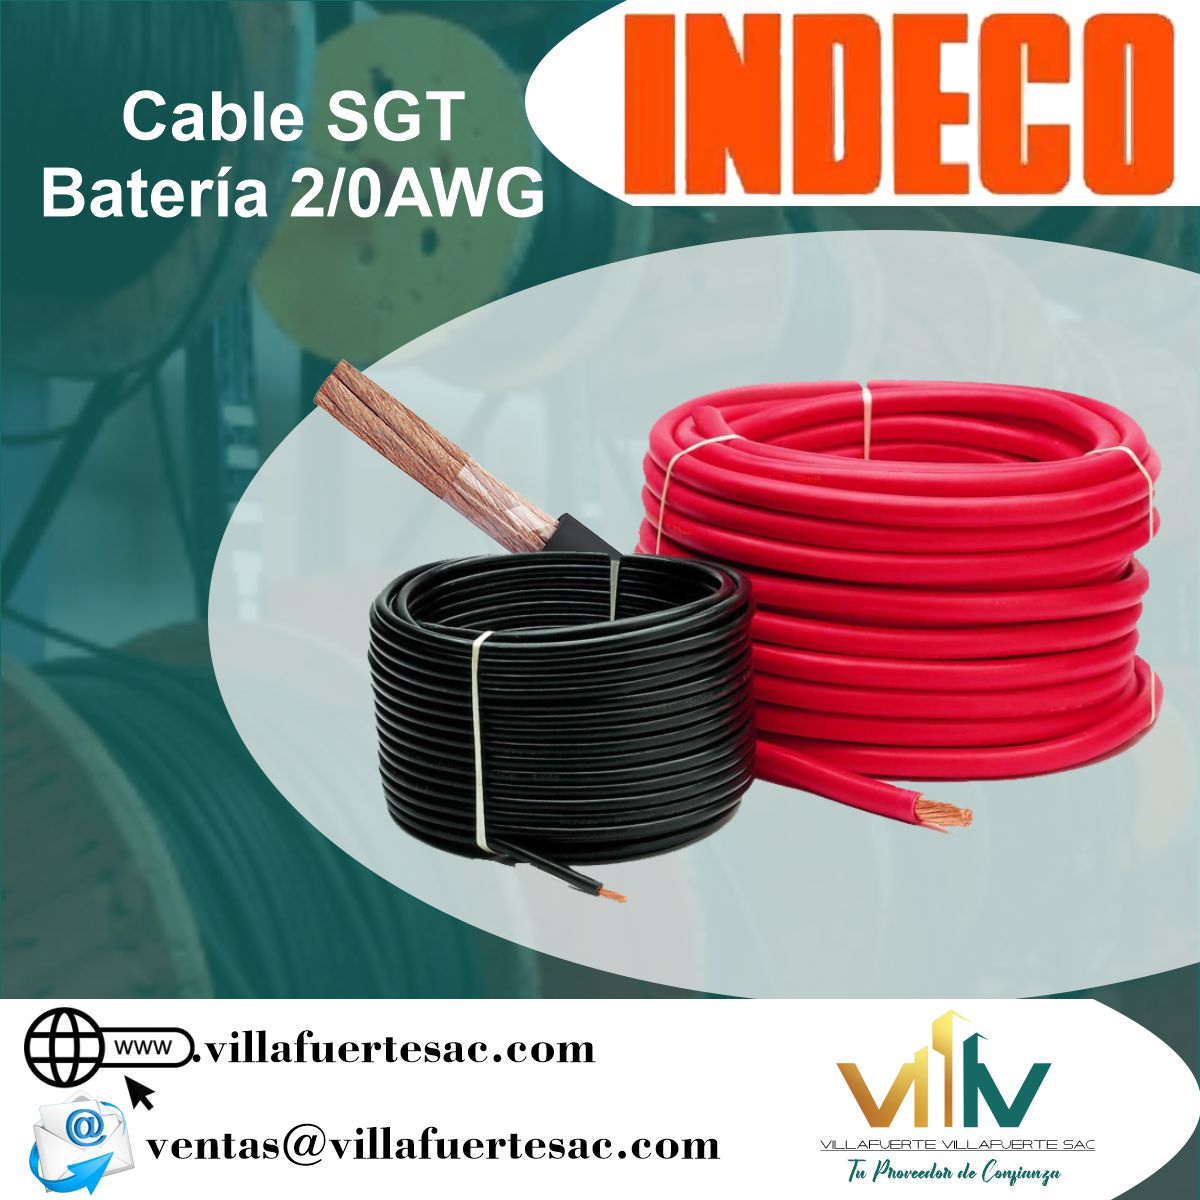 Cable Bateria SGT 2/0 awg Indeco - Villafuerte Villafuerte S.A.C